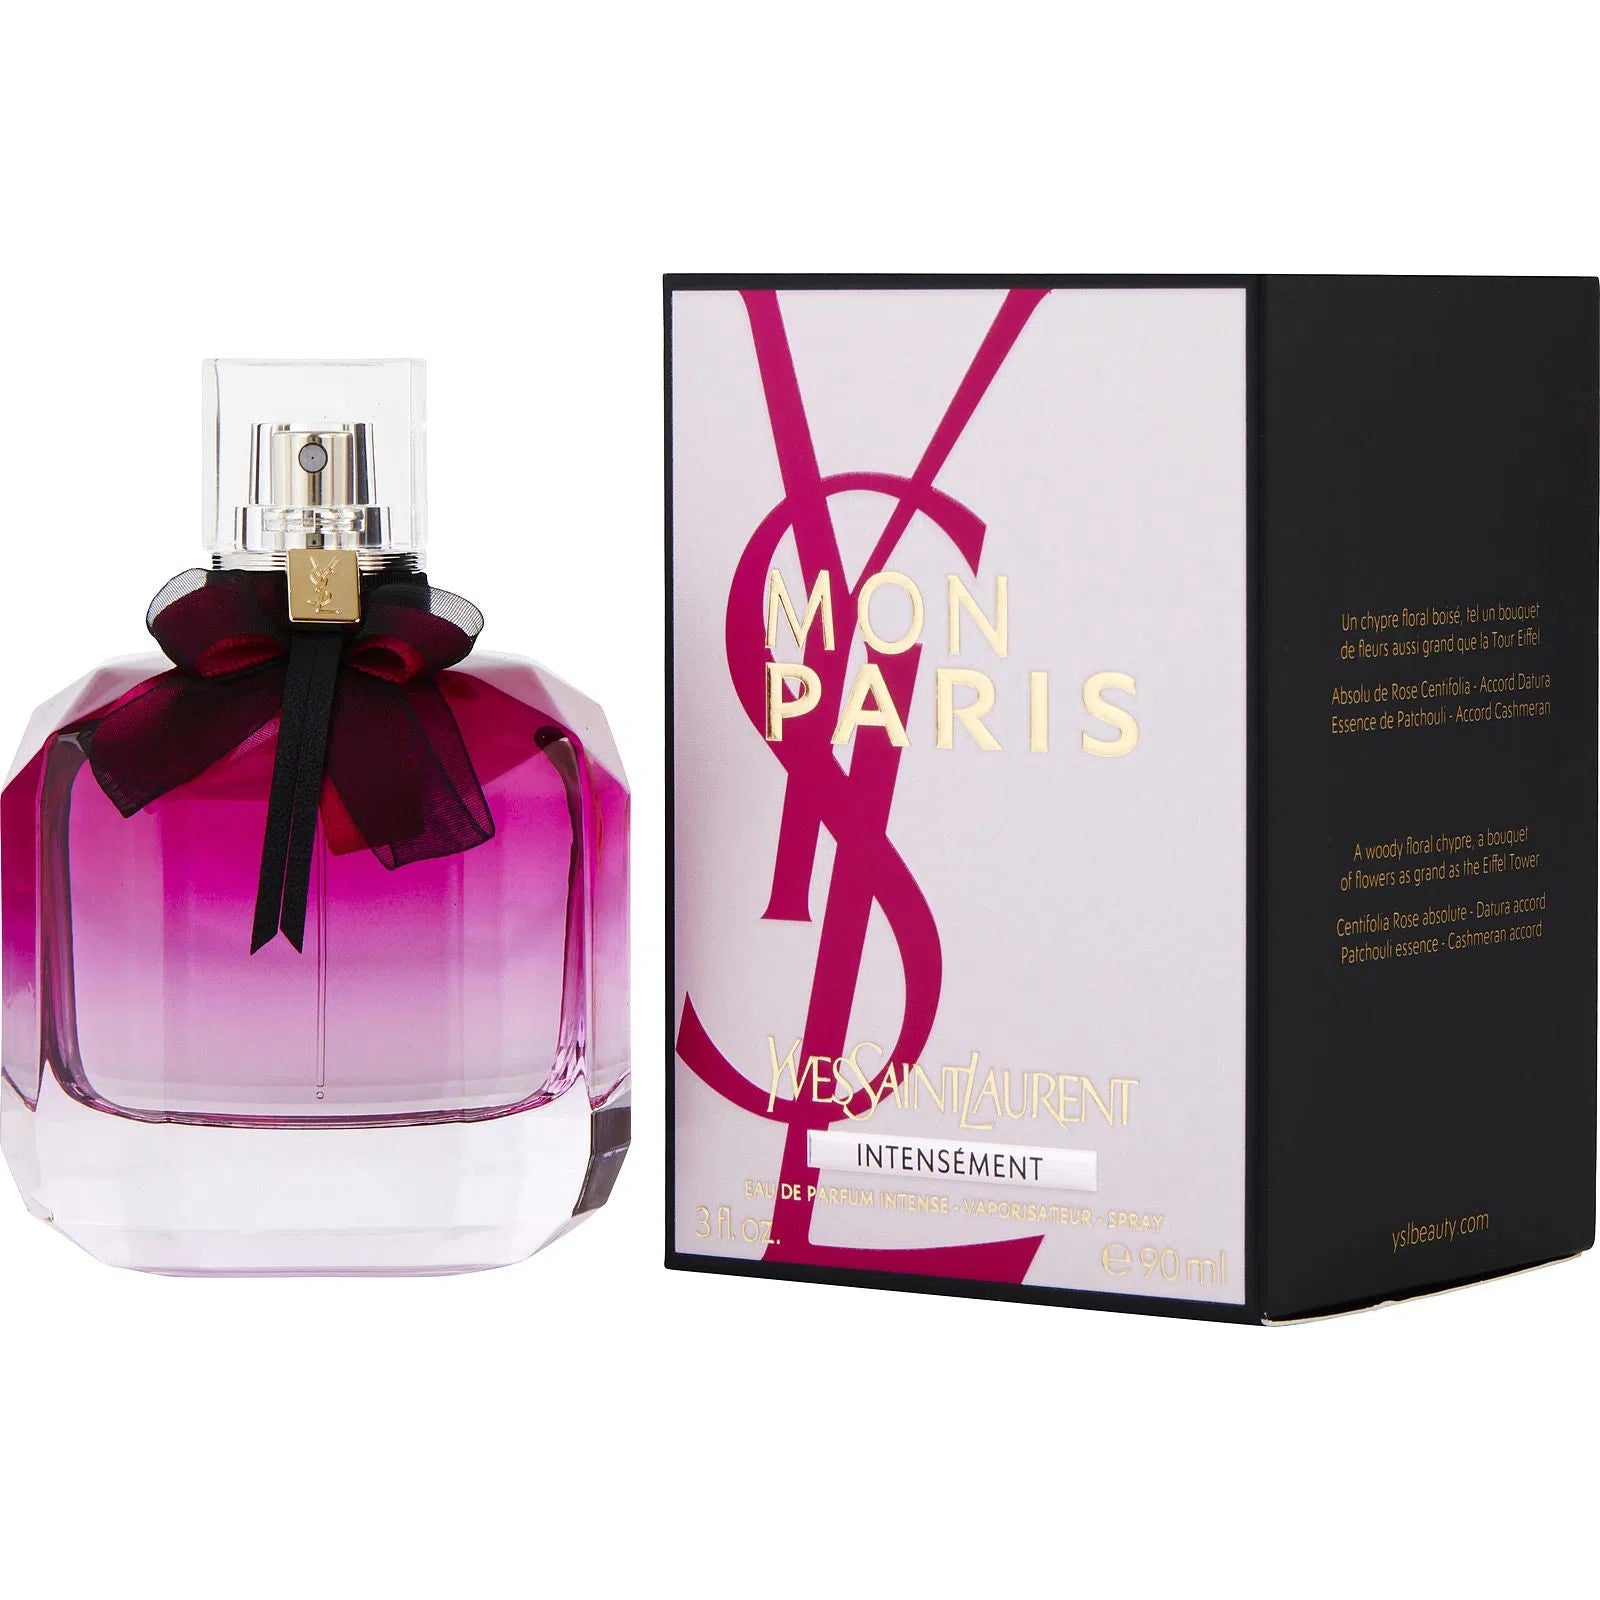 Perfume Yves Saint Laurent Mon Paris Intensement EDP (W) / 90 ml - 3614272899711- Prive Perfumes Honduras